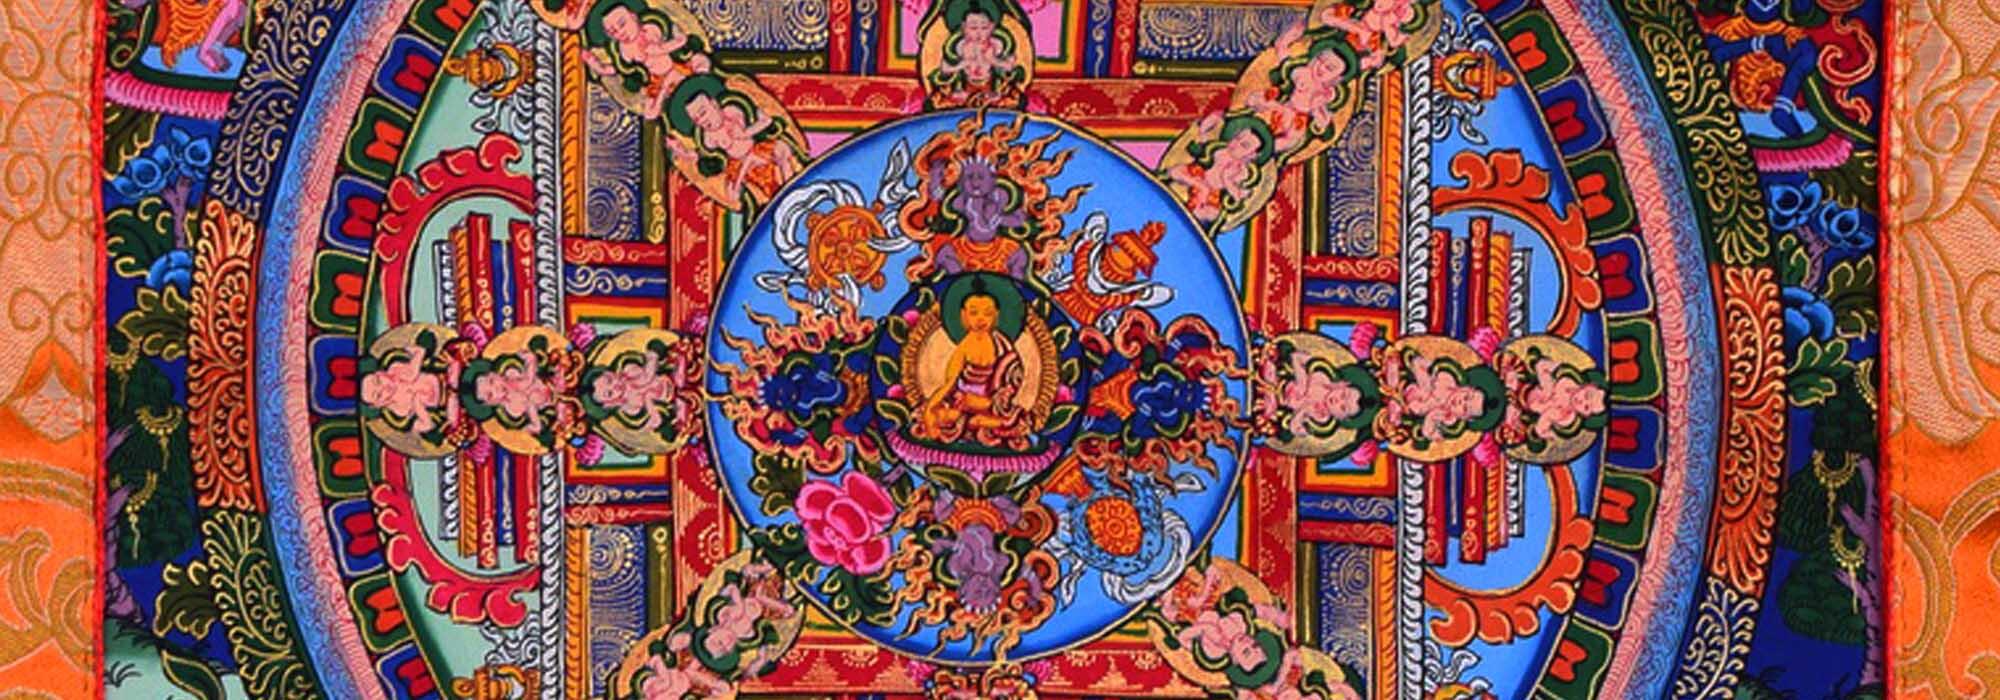 Tantric-mandal-of-Buddhist-pantheons